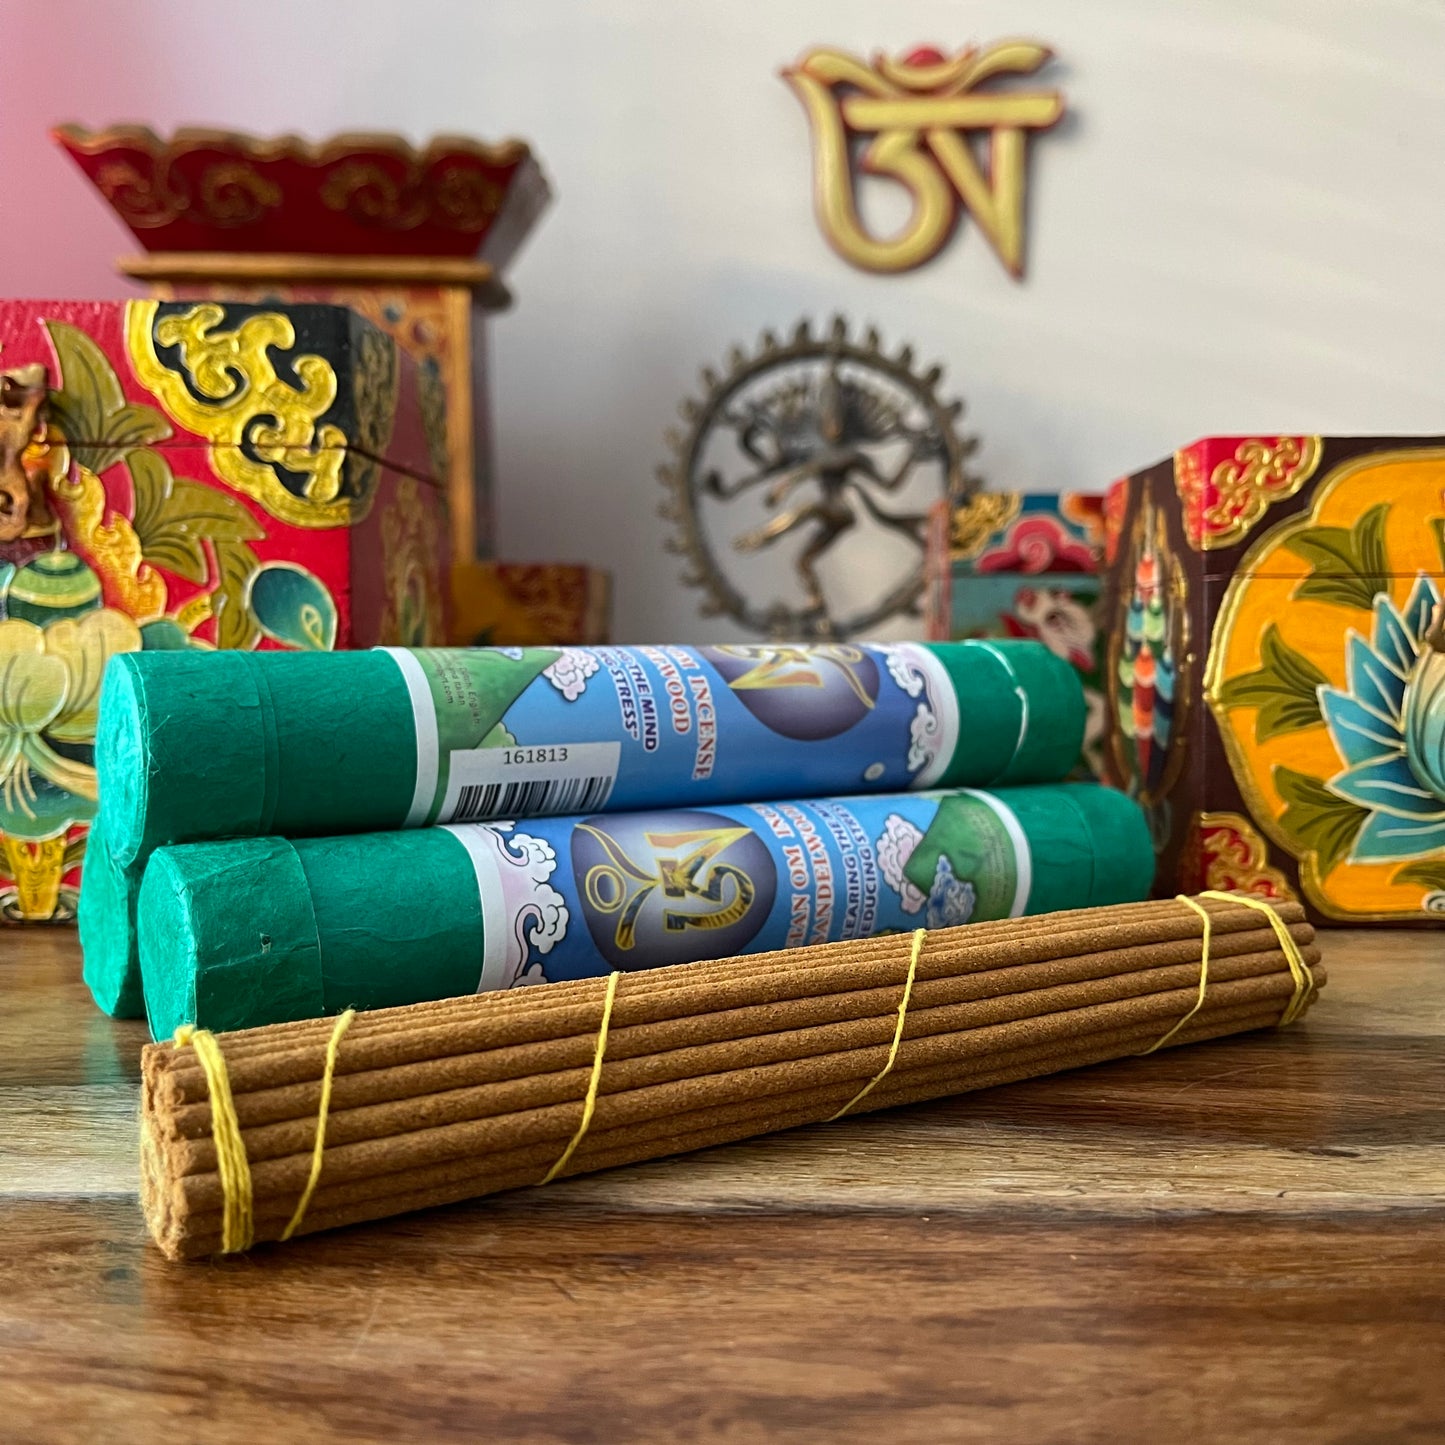 Tibetan OM Sandalwood incense